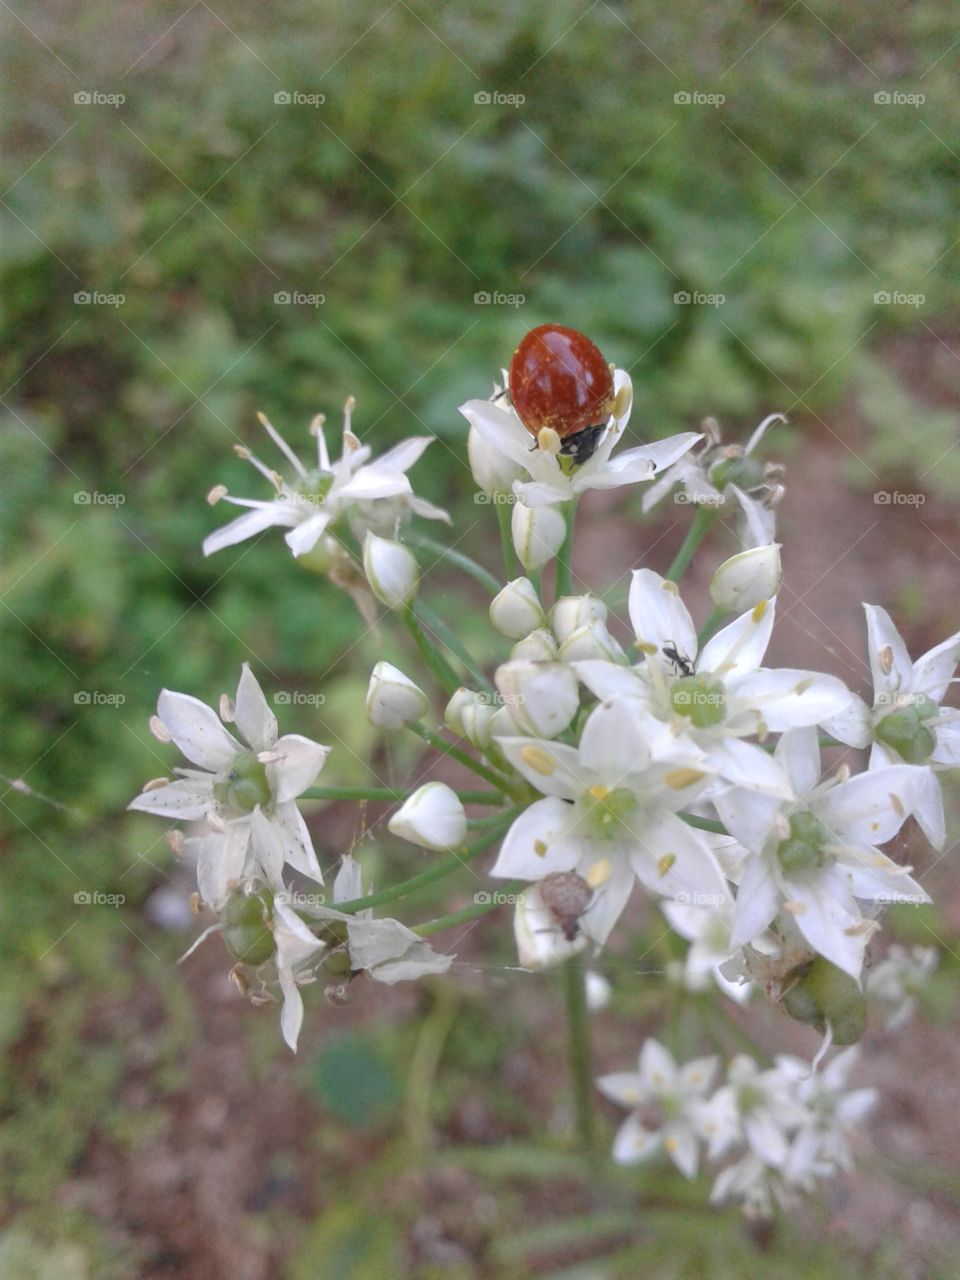 Flowers and ladybug